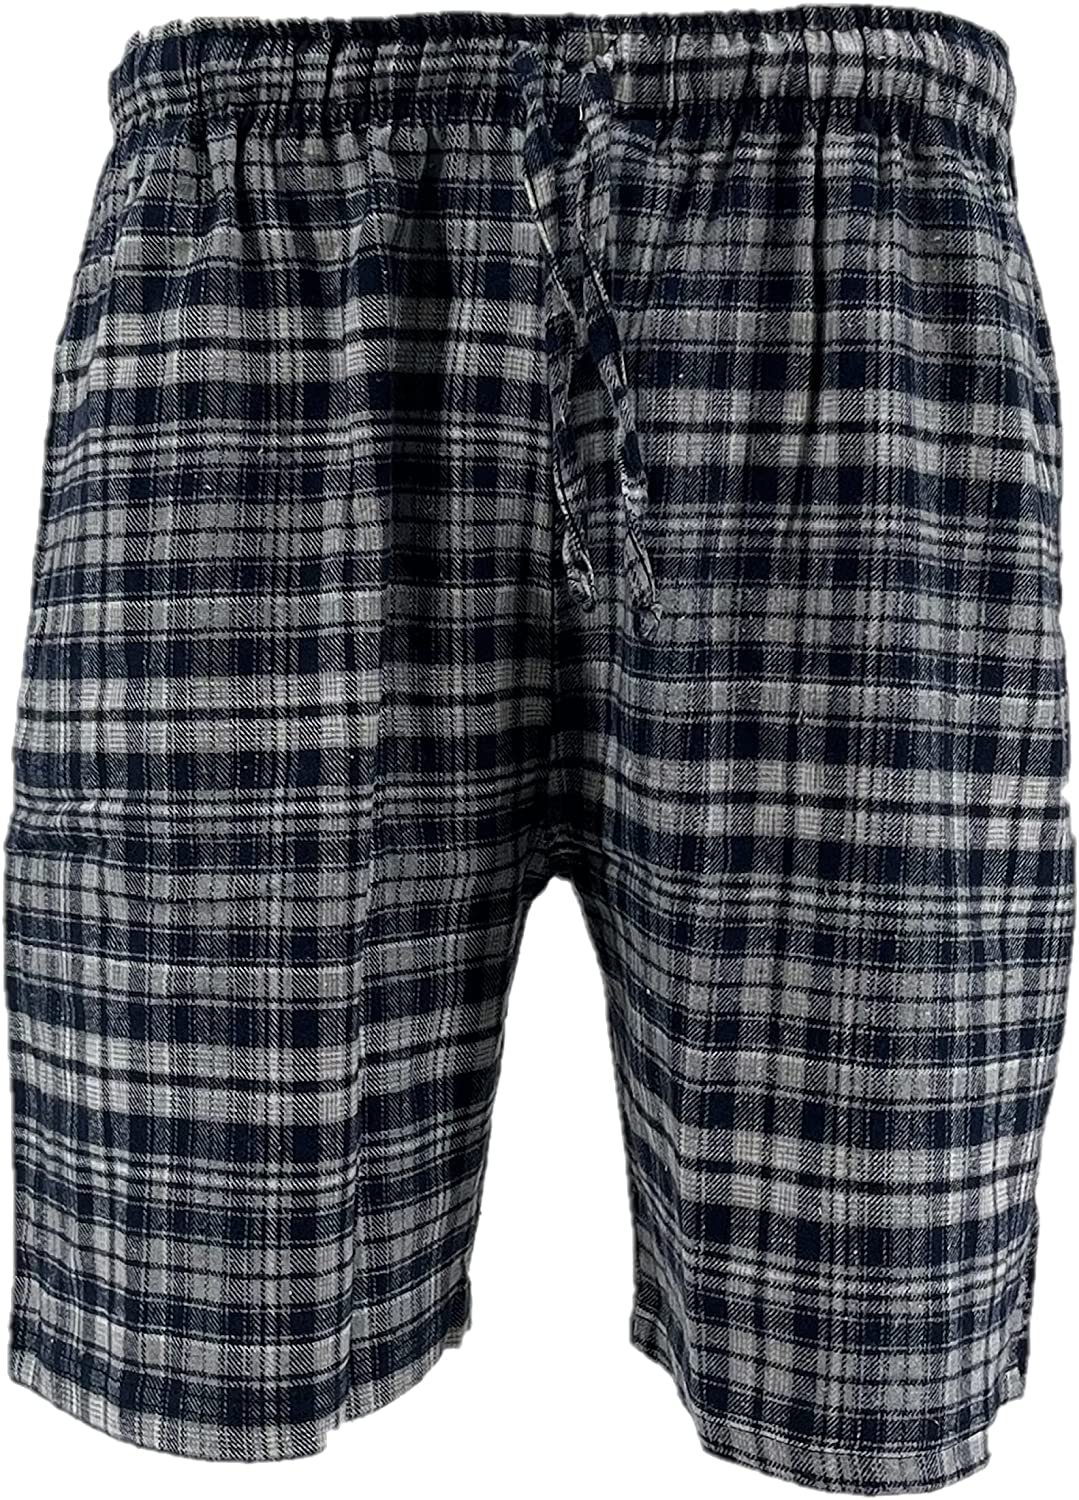 R,B&W Check Ritzy Men's Sleep Short Pajama 100% Cotton Woven Plaid ComfortSoft 